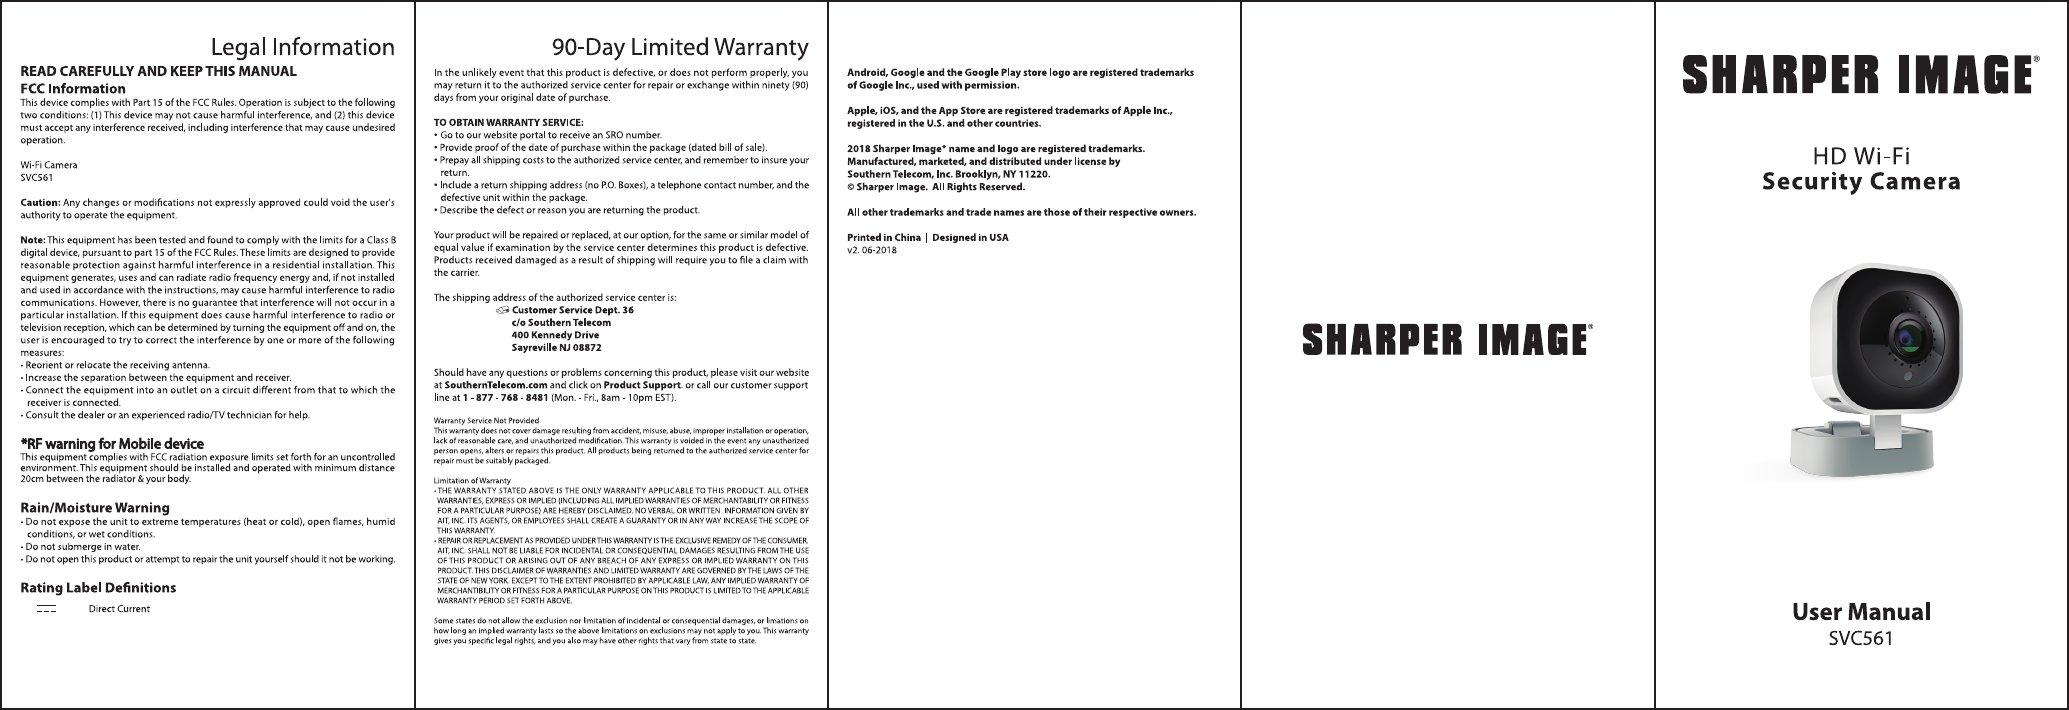 HD WI-FI Security Camera User Manual SVC561